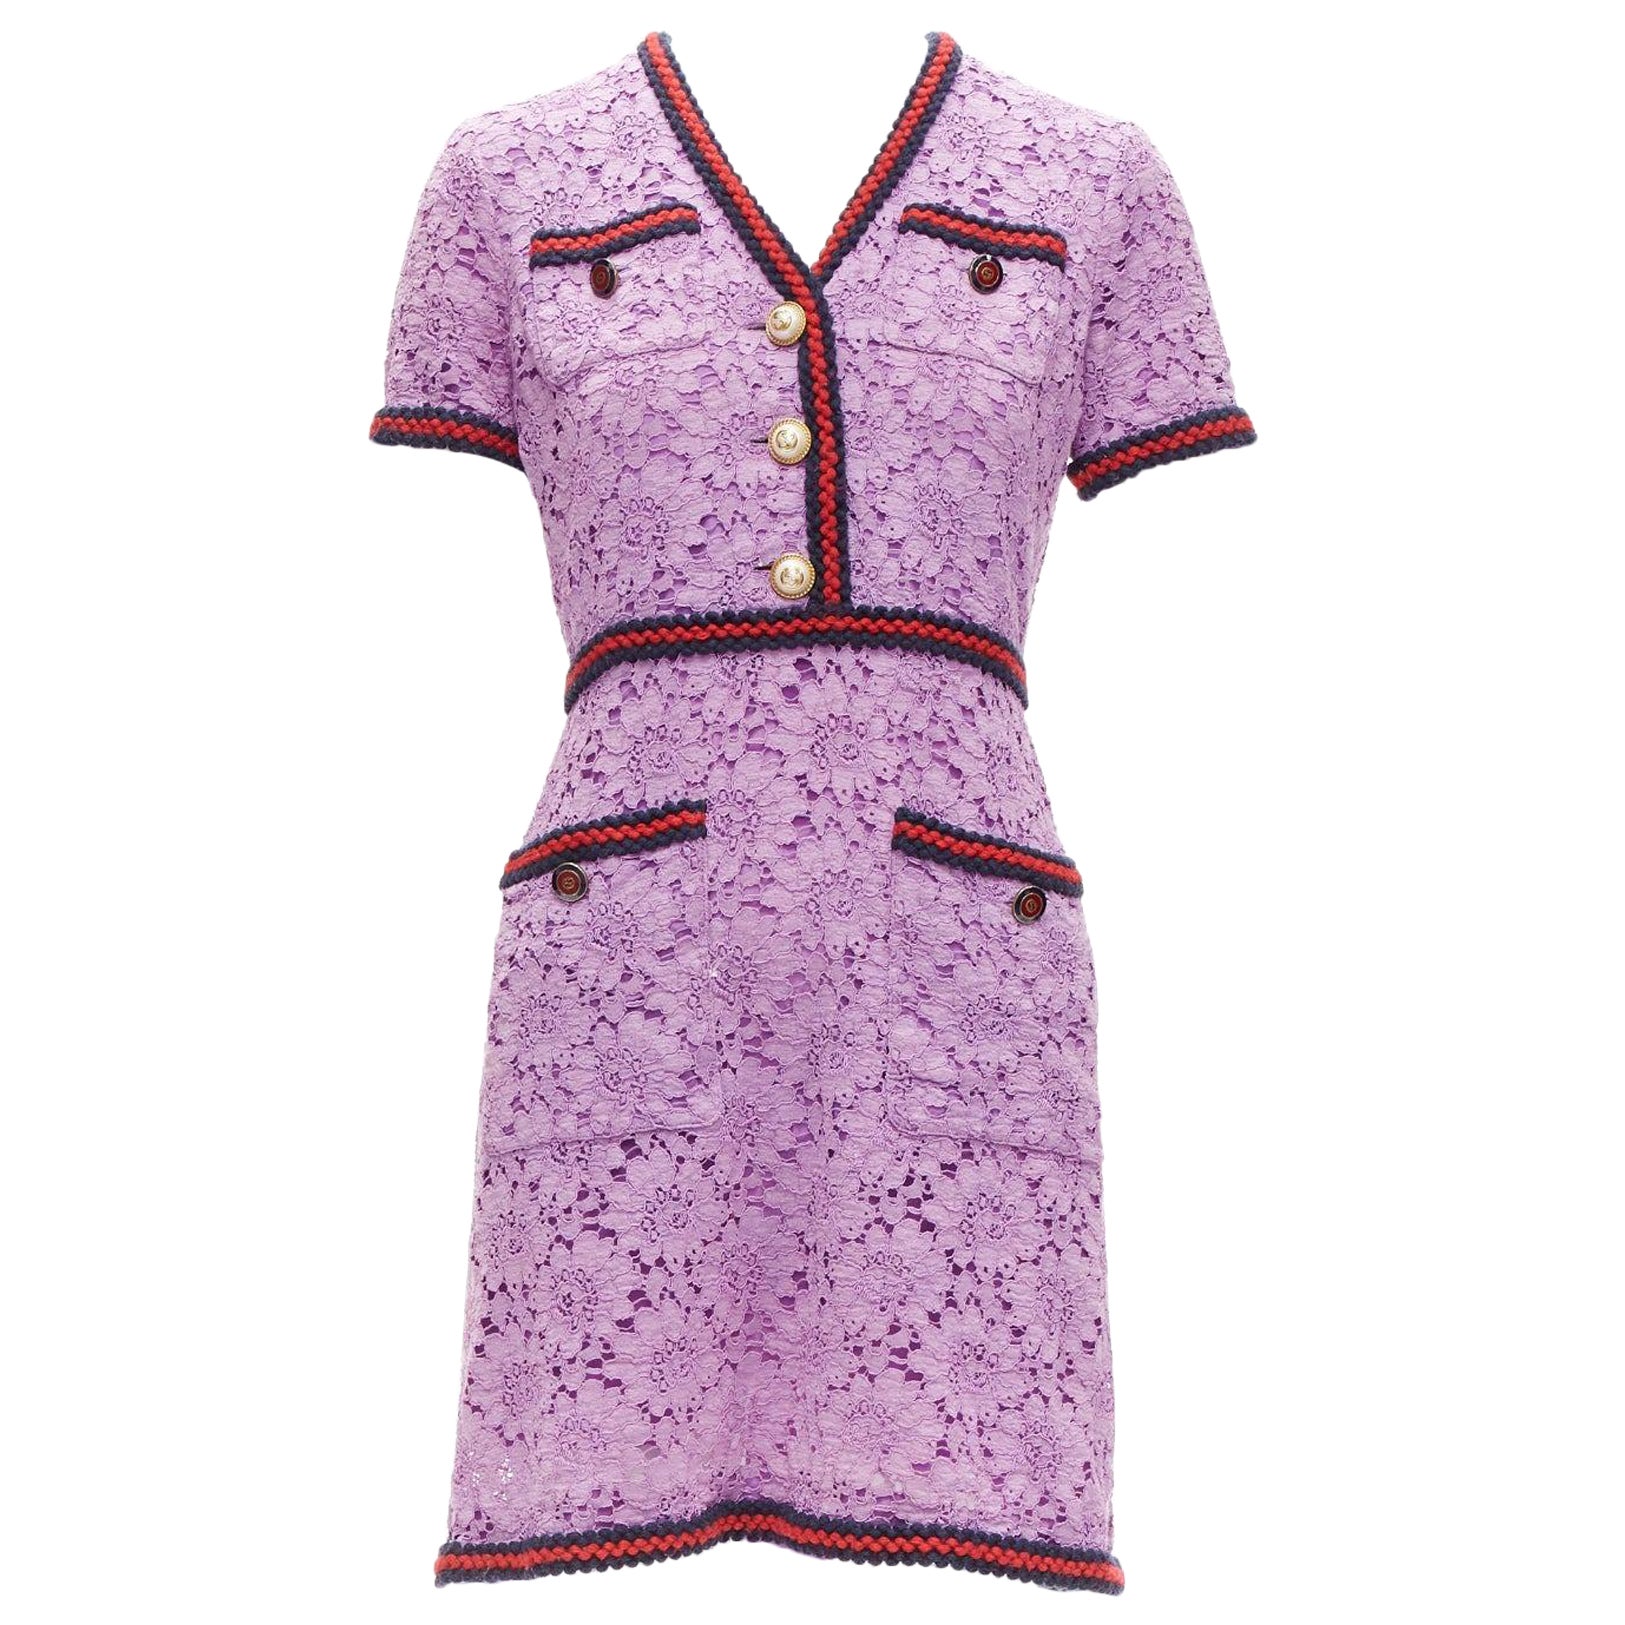 GUCCI Alessandro Michele 2017 purple lace 4 pocket preppy dress IT40 S For Sale